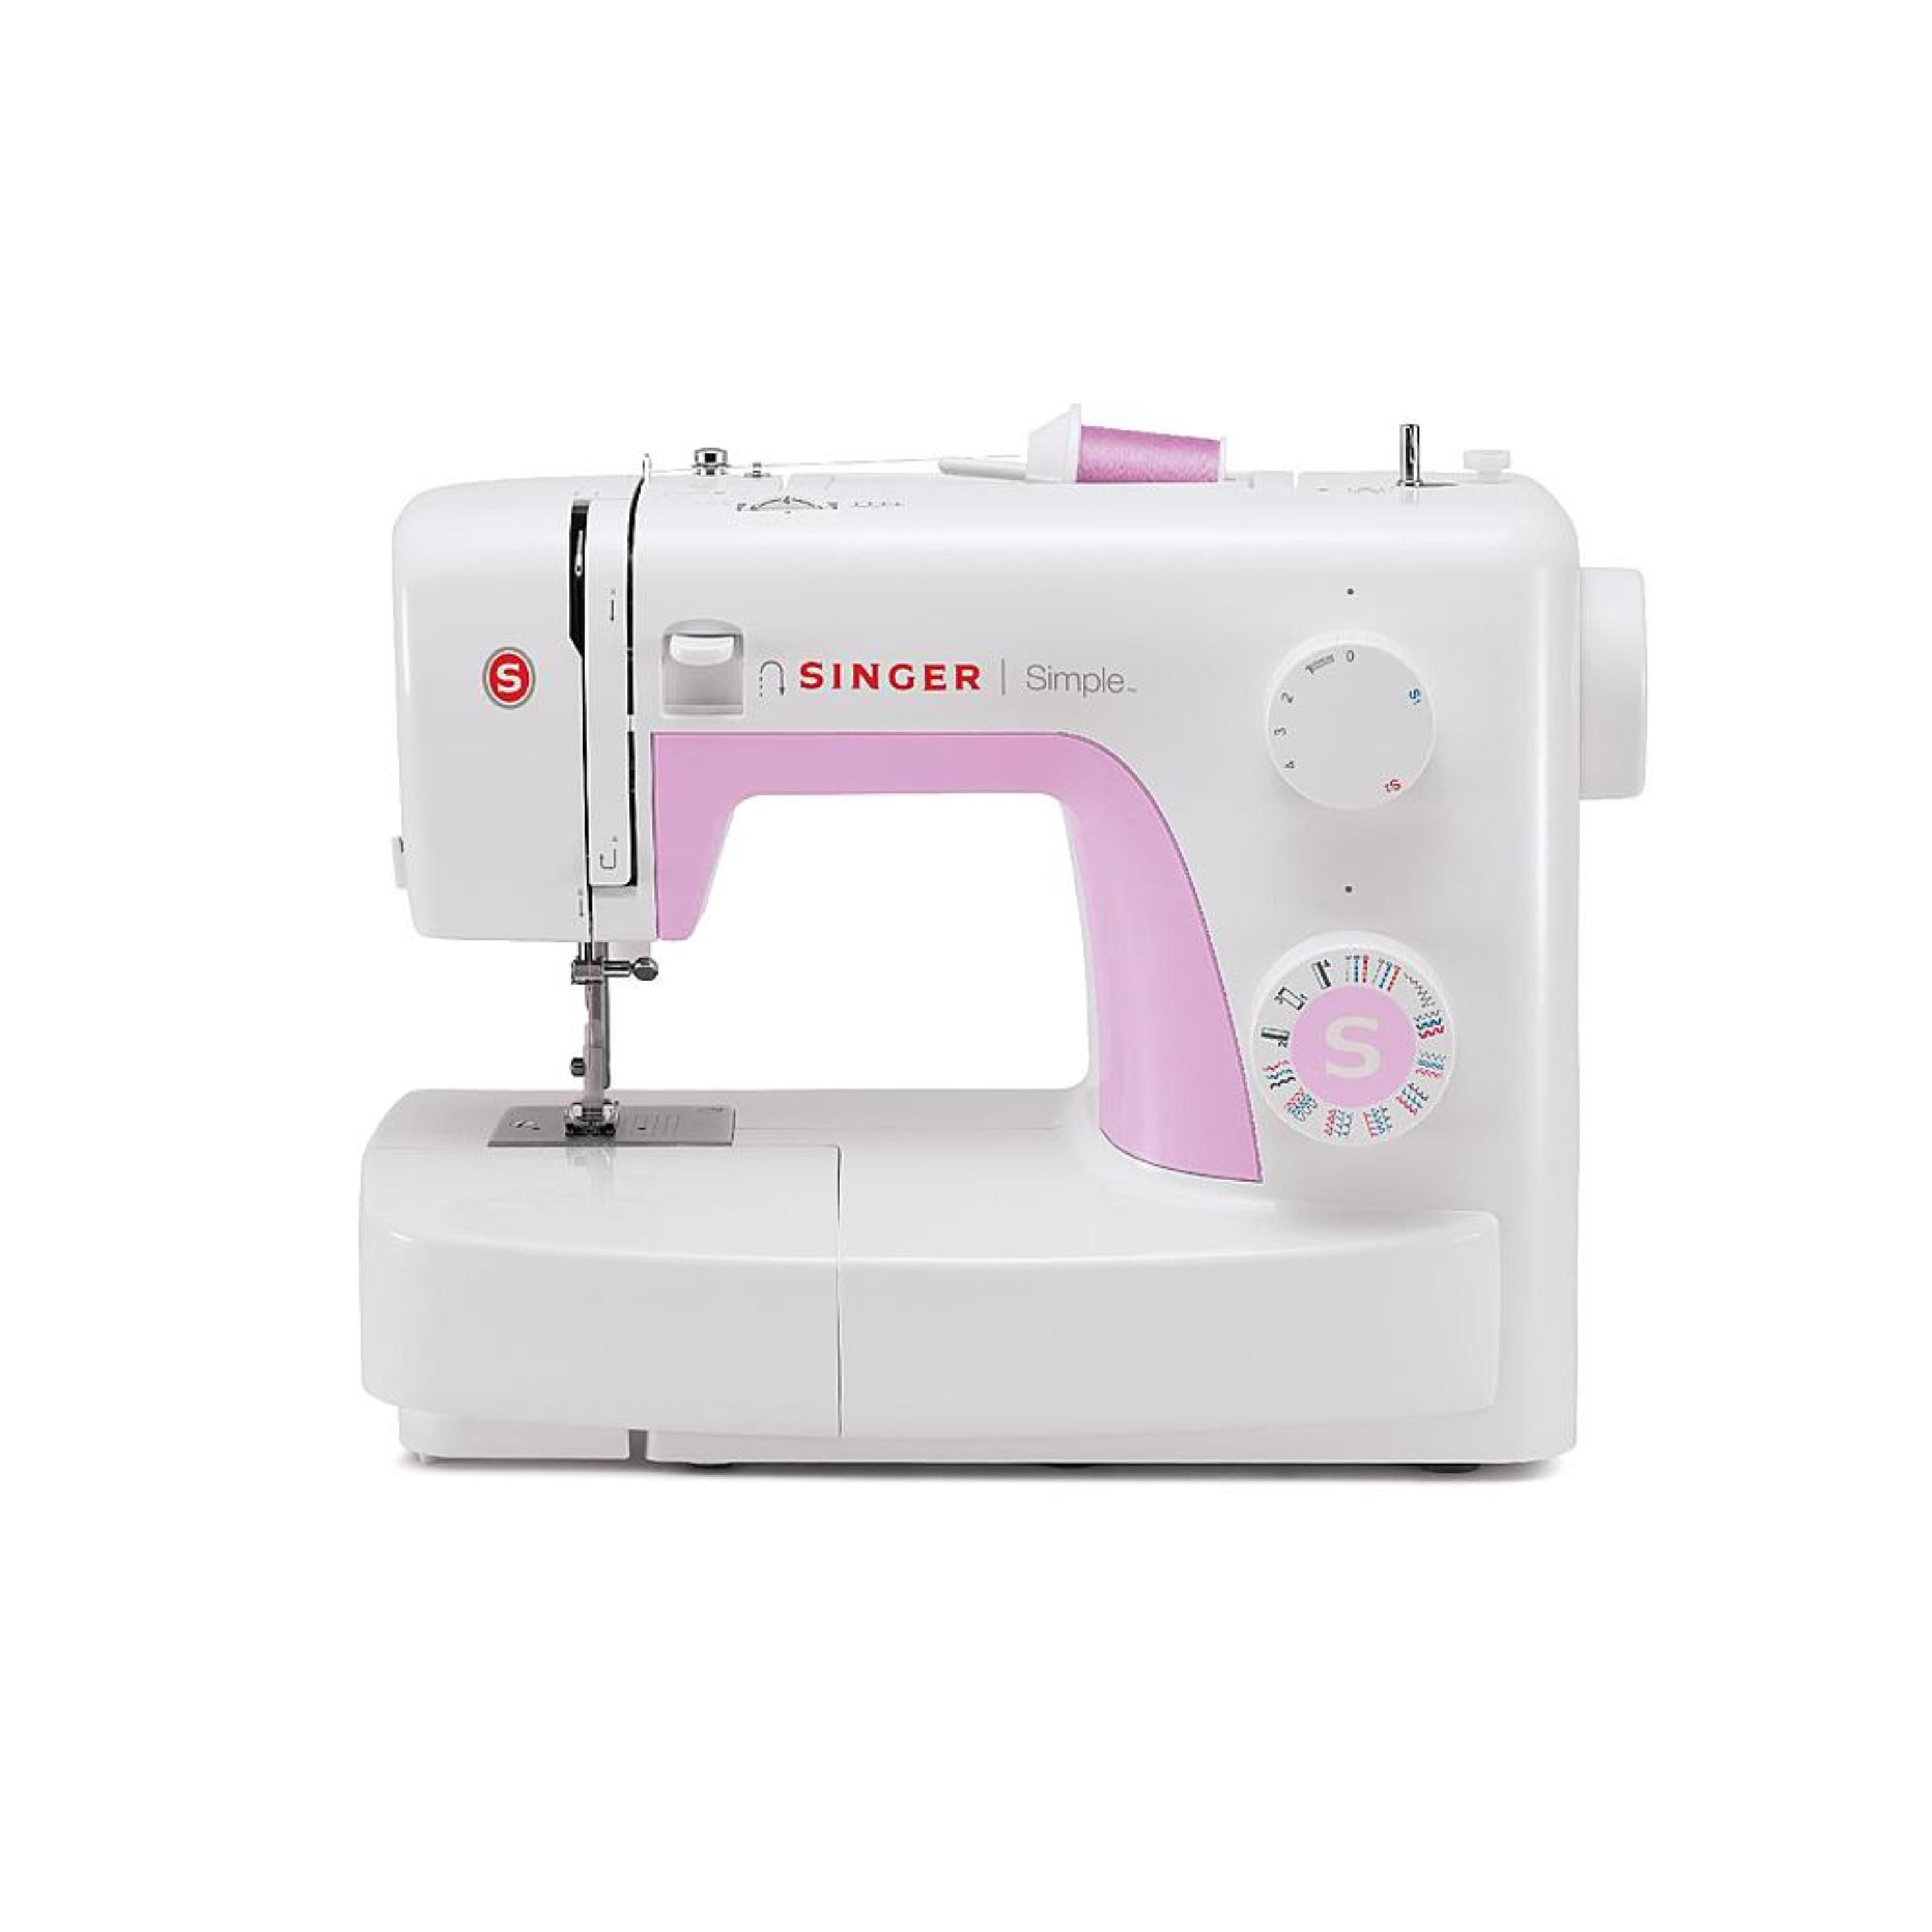 Singer 3223 230006112 Simple Sewing Machine, Pink